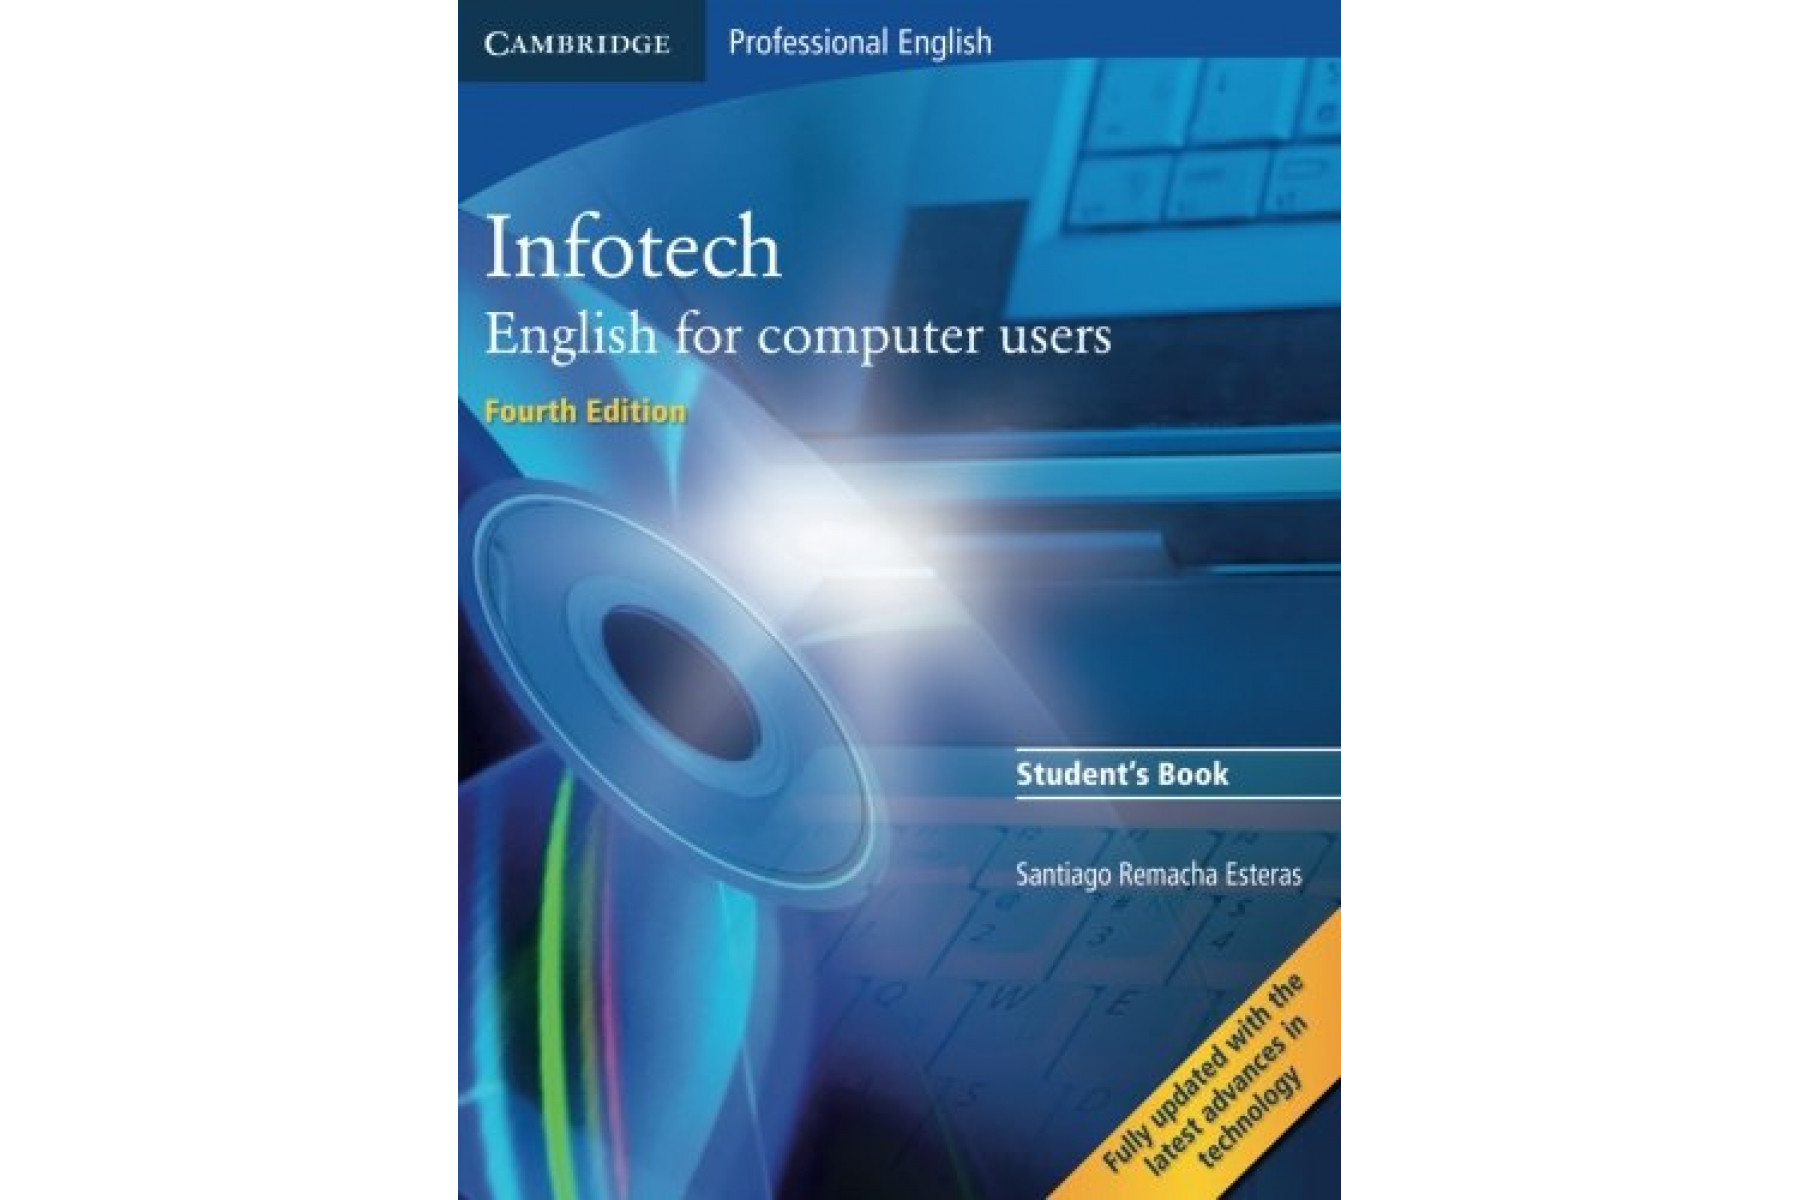 Infotech Student's Book (Cambridge Professional English)